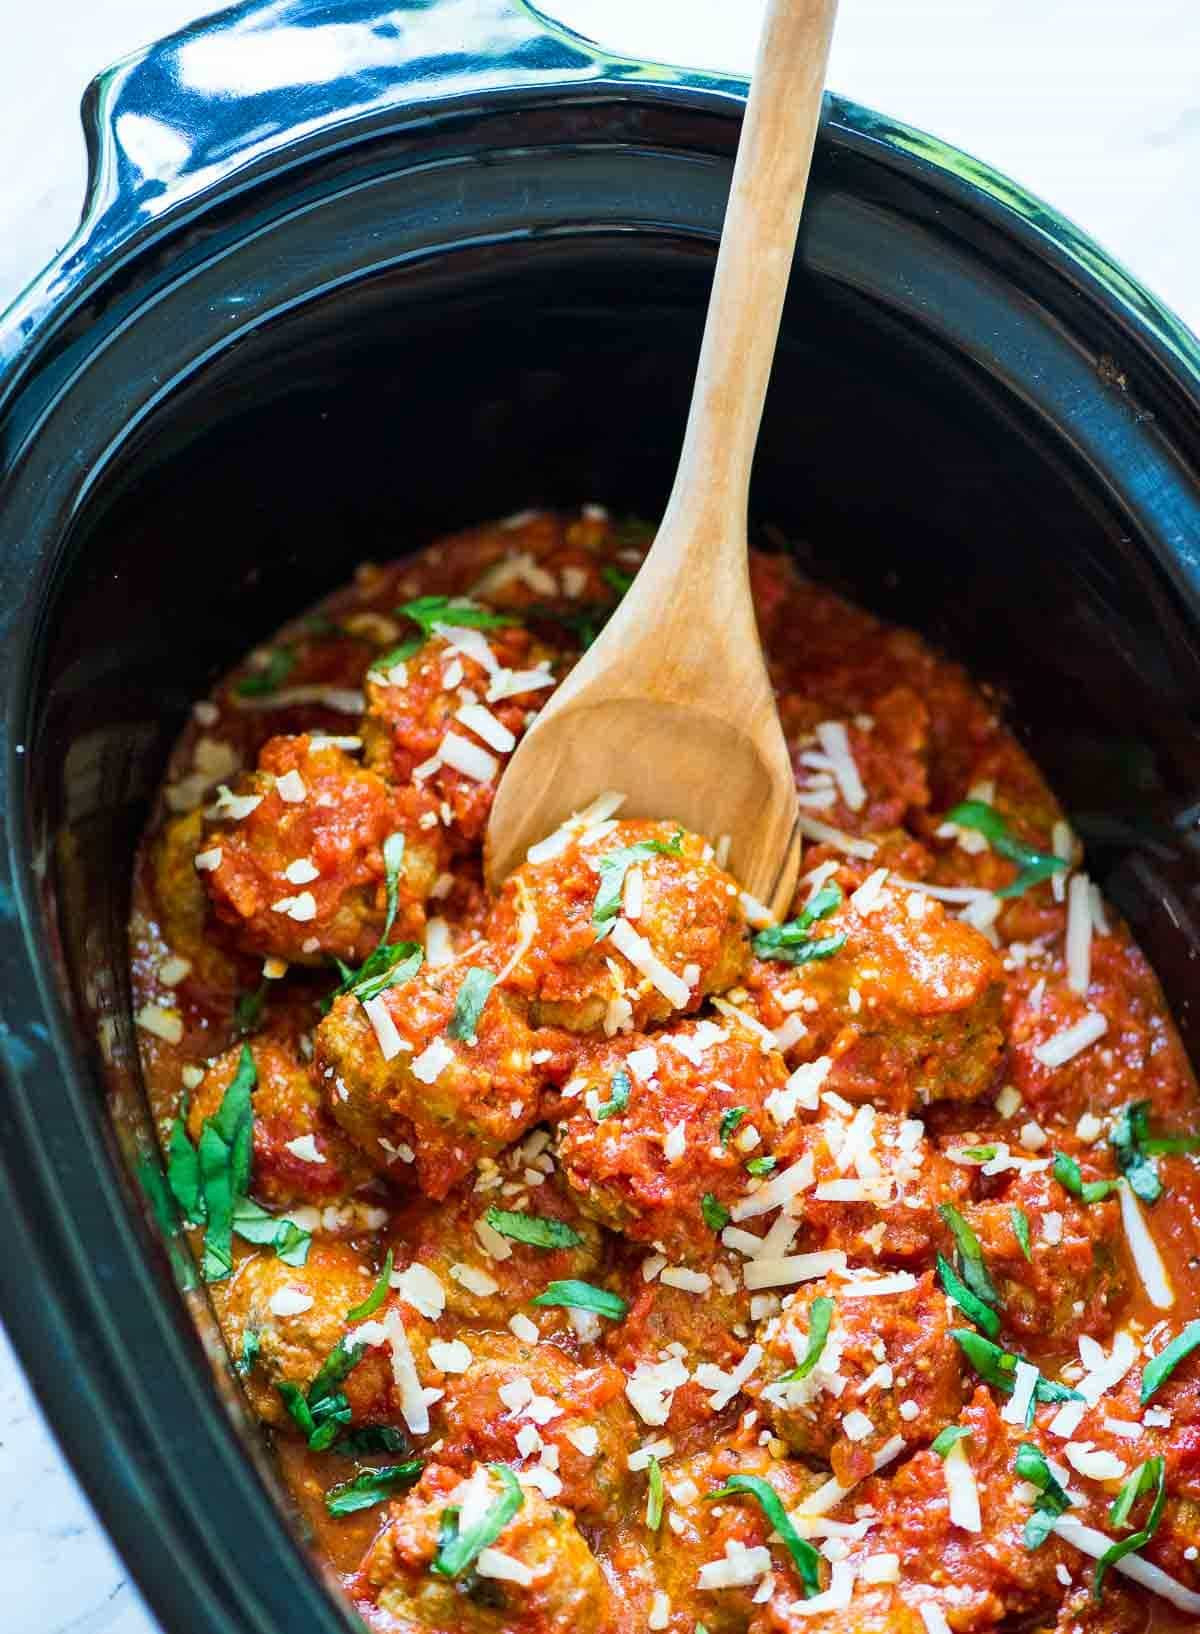 Best Healthy Slow Cooker Recipes
 Crock Pot Turkey Meatballs Recipe